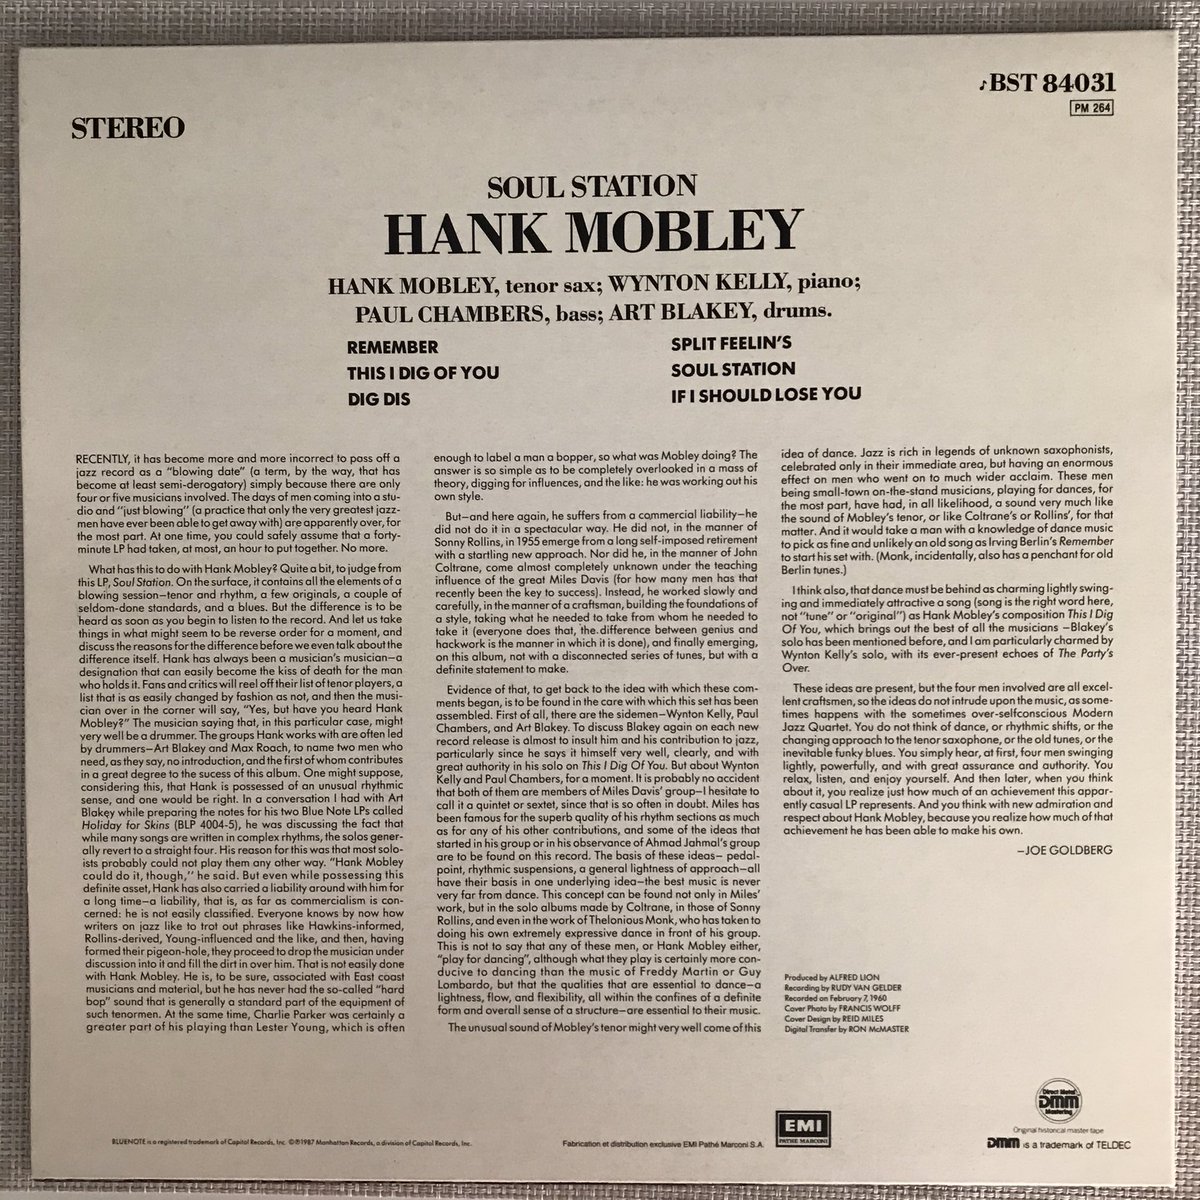 Another classic on the turntable #hankmobley #soulstation #bluenote #rudyvangelder #reidmiles #vinyl #jazz